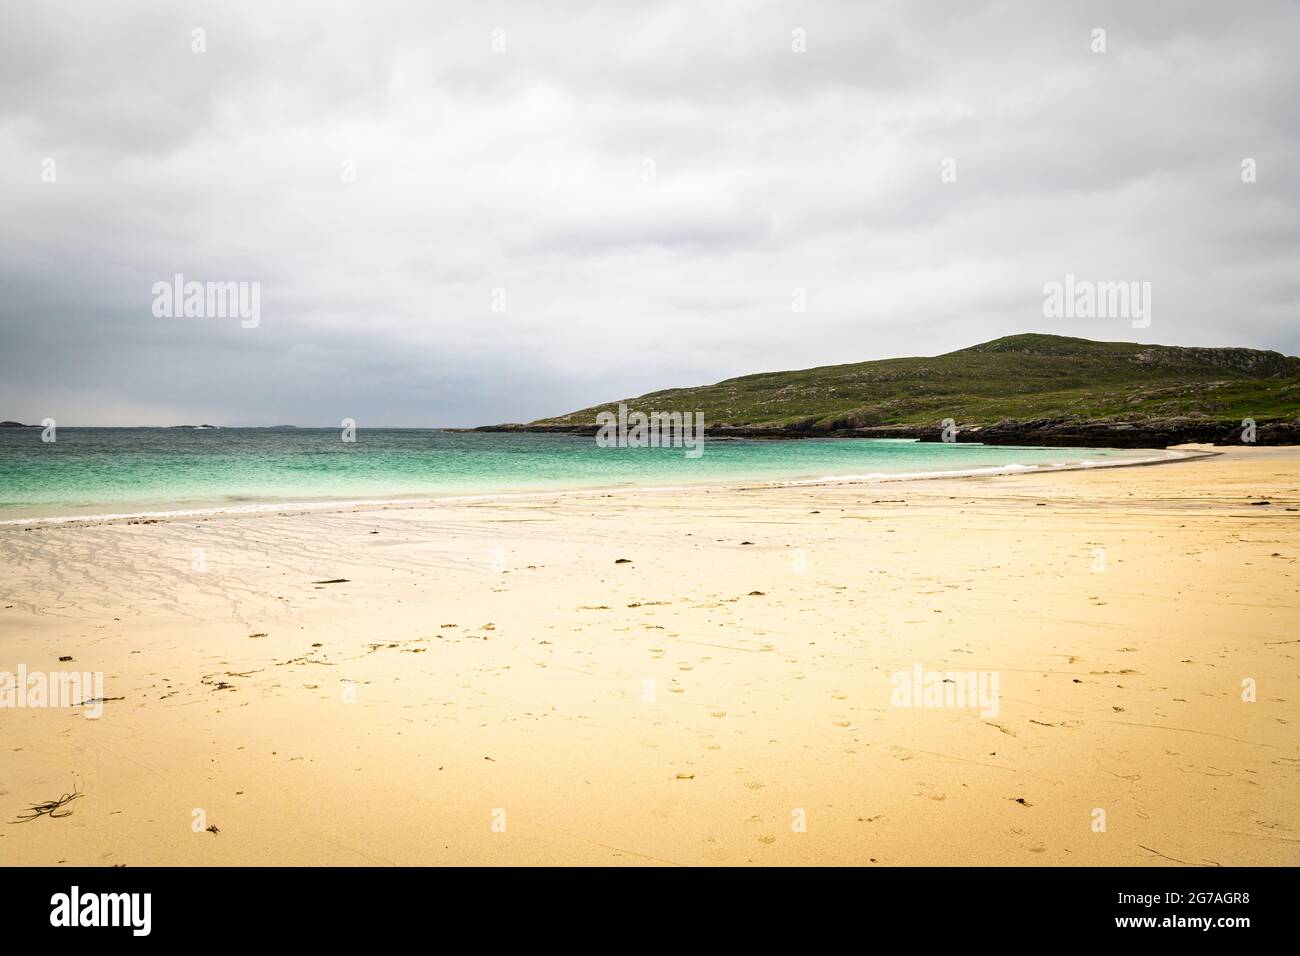 A summer 3 shot HDR image of a deserted  Hushinish, Huisinis, beach and bay on the Isle of Harris, Western Isles, Scotland. 24 June 2021 Stock Photo